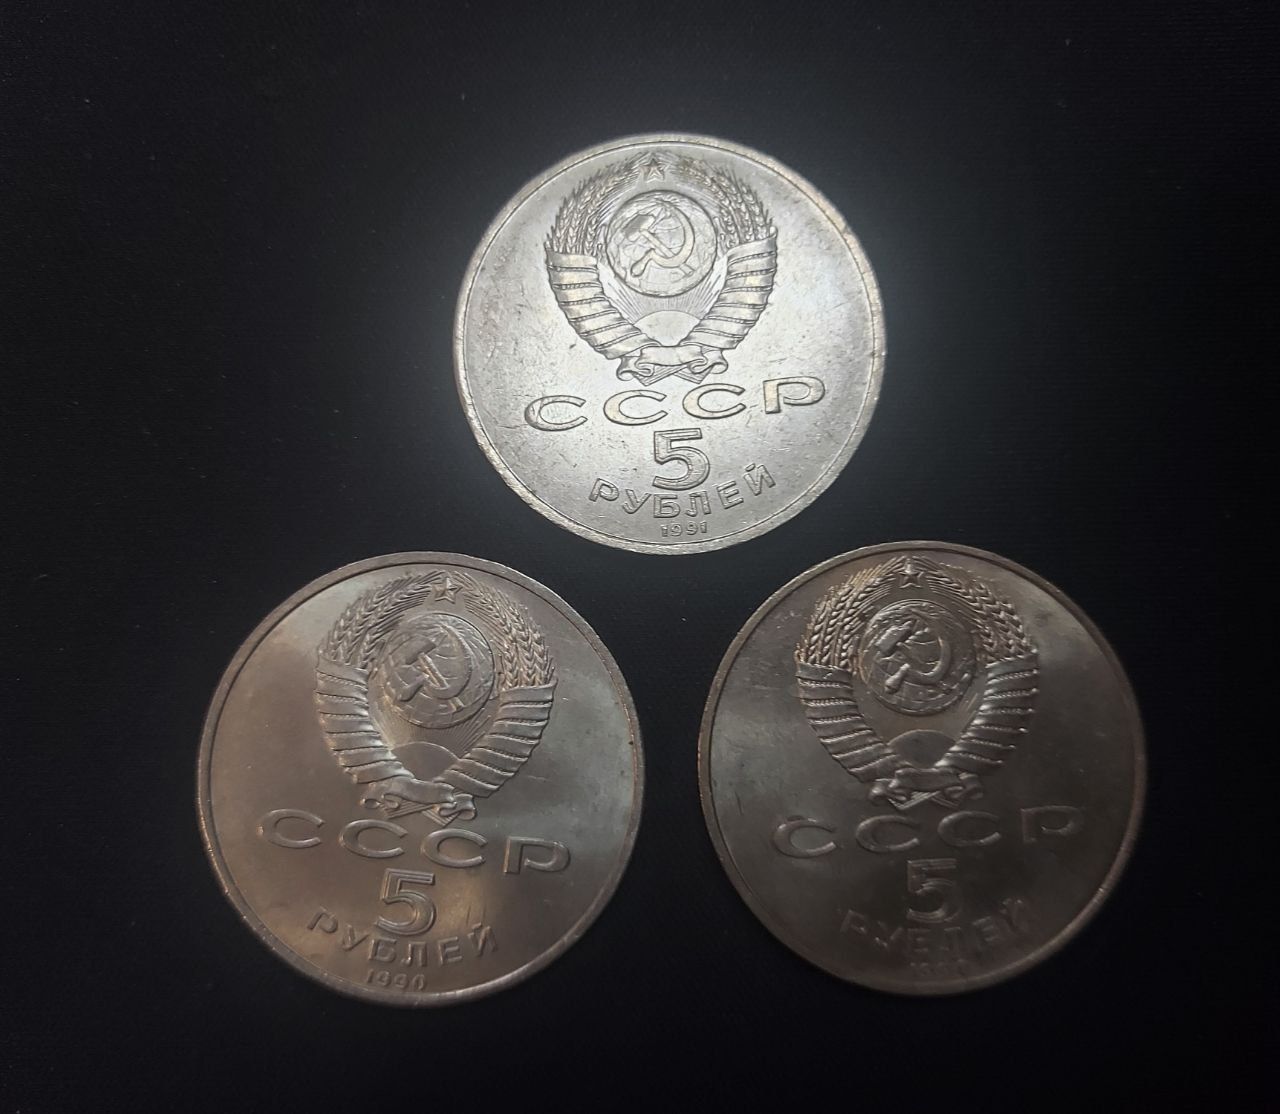 Рублі, монети СРСР / монеты СССР